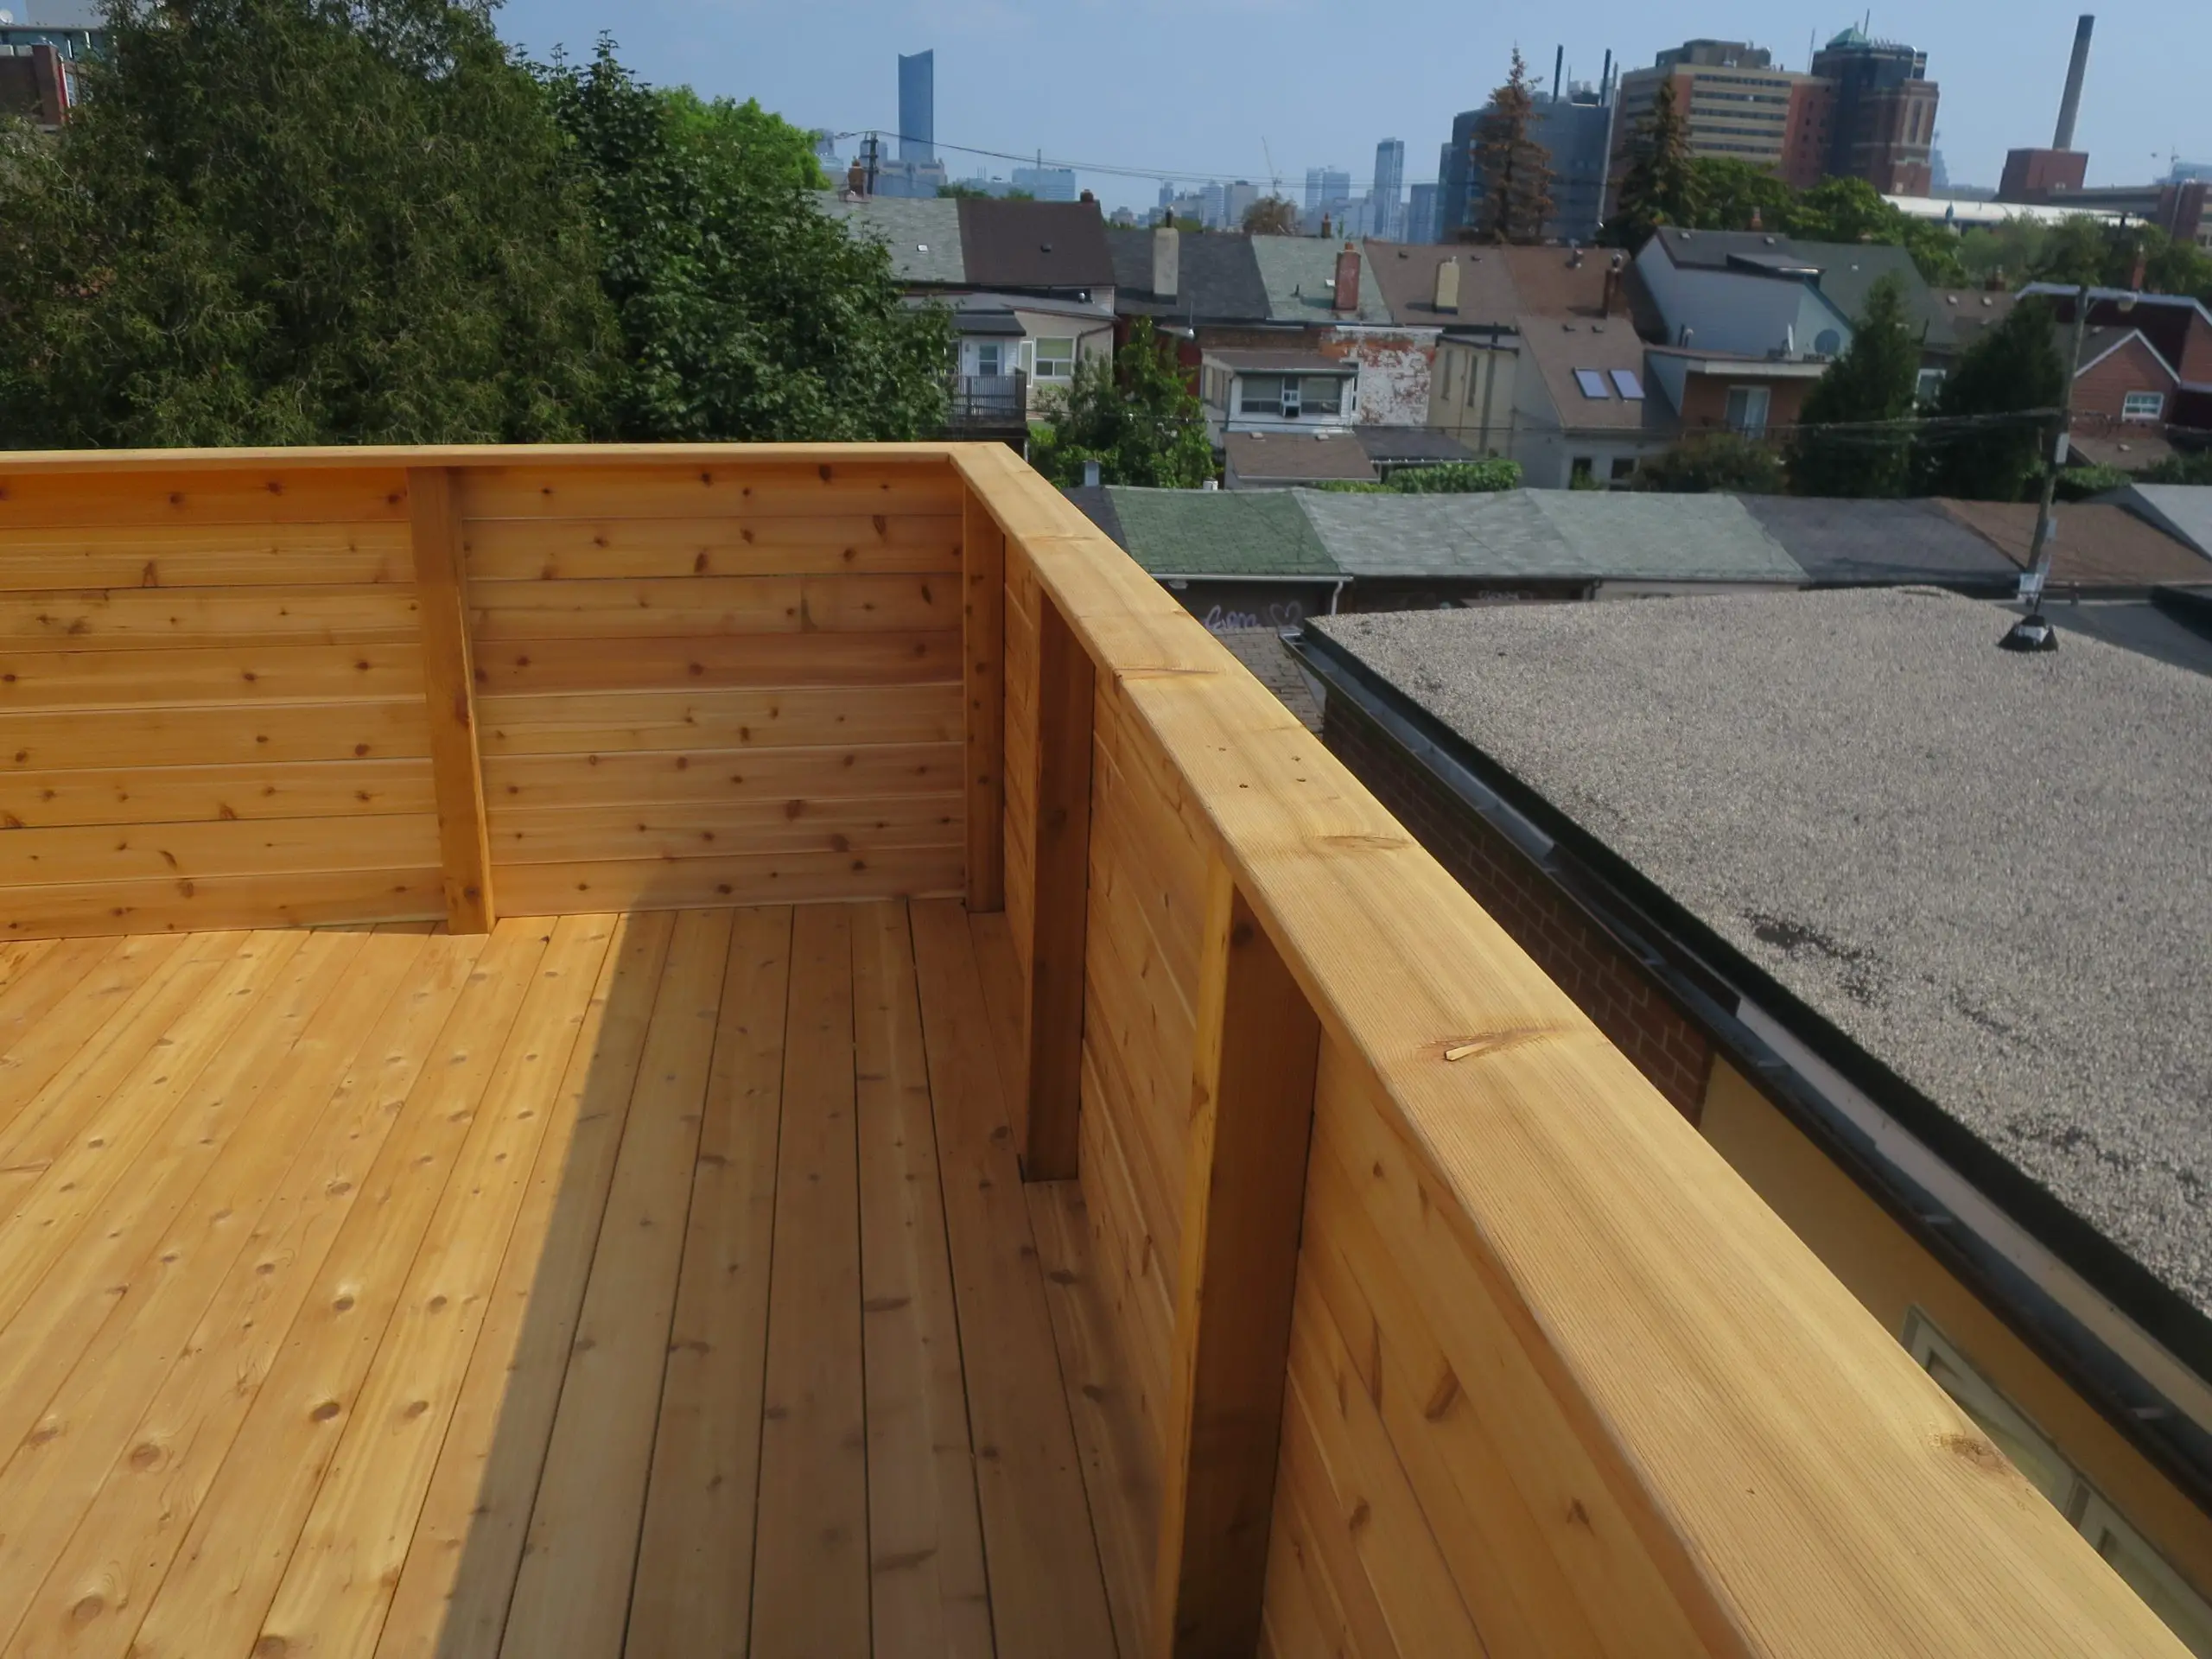 RoofTop Deck Construction